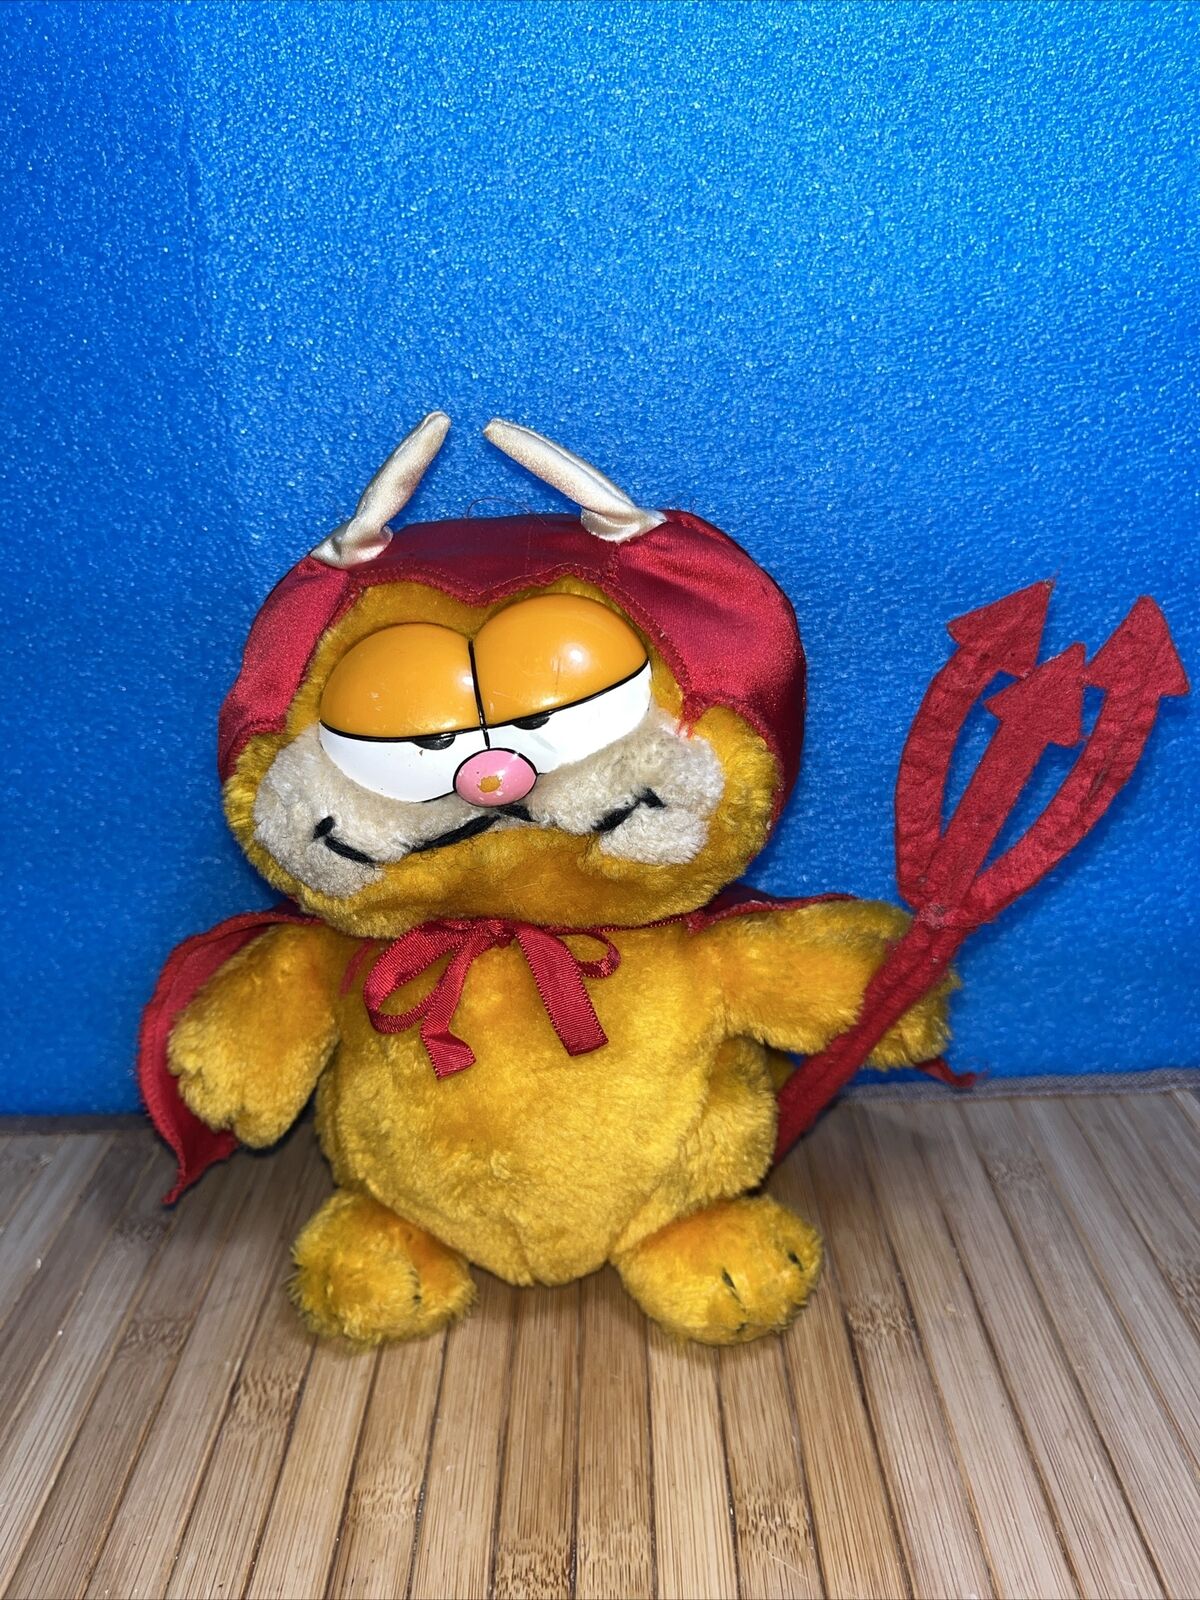 Vintage 1978 1981 Garfield Plush Devil Costume Stuffed Animal Toy Dakin Cat